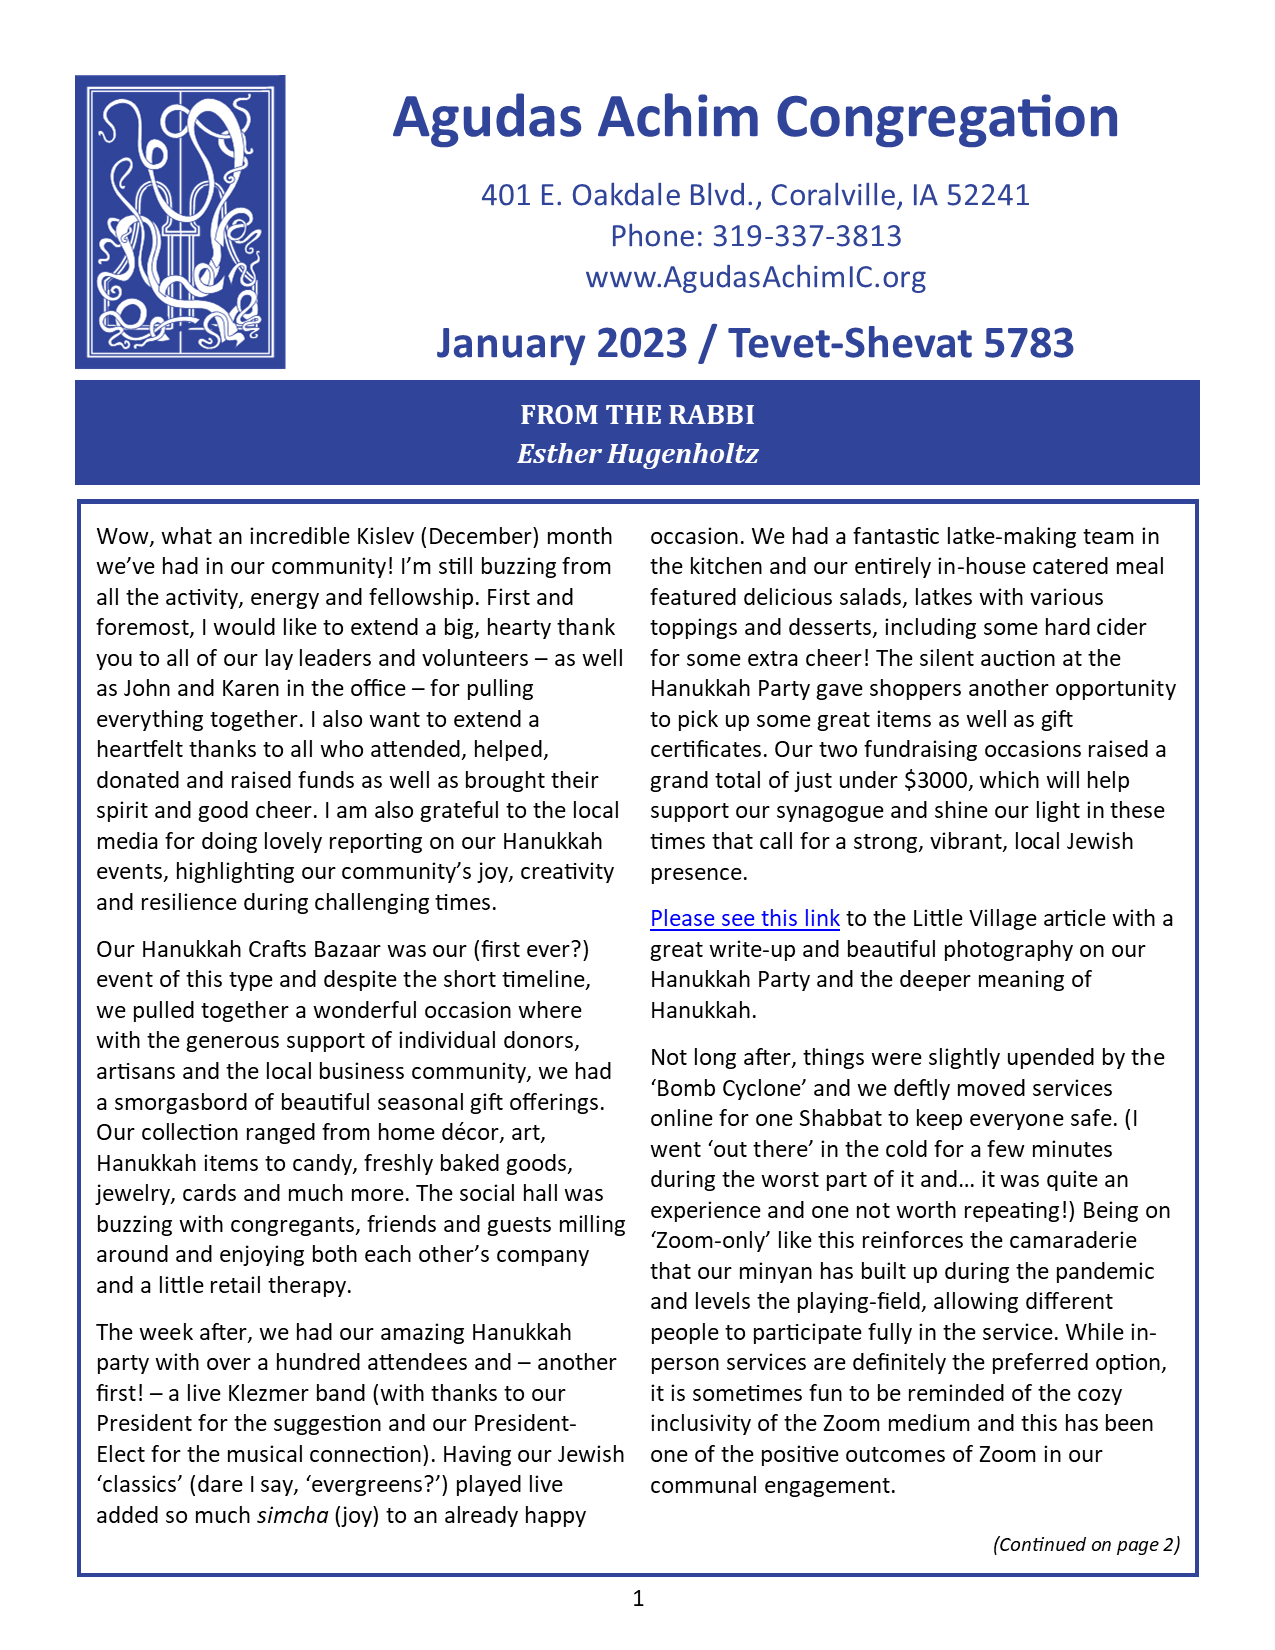 January 2023 Bulletin